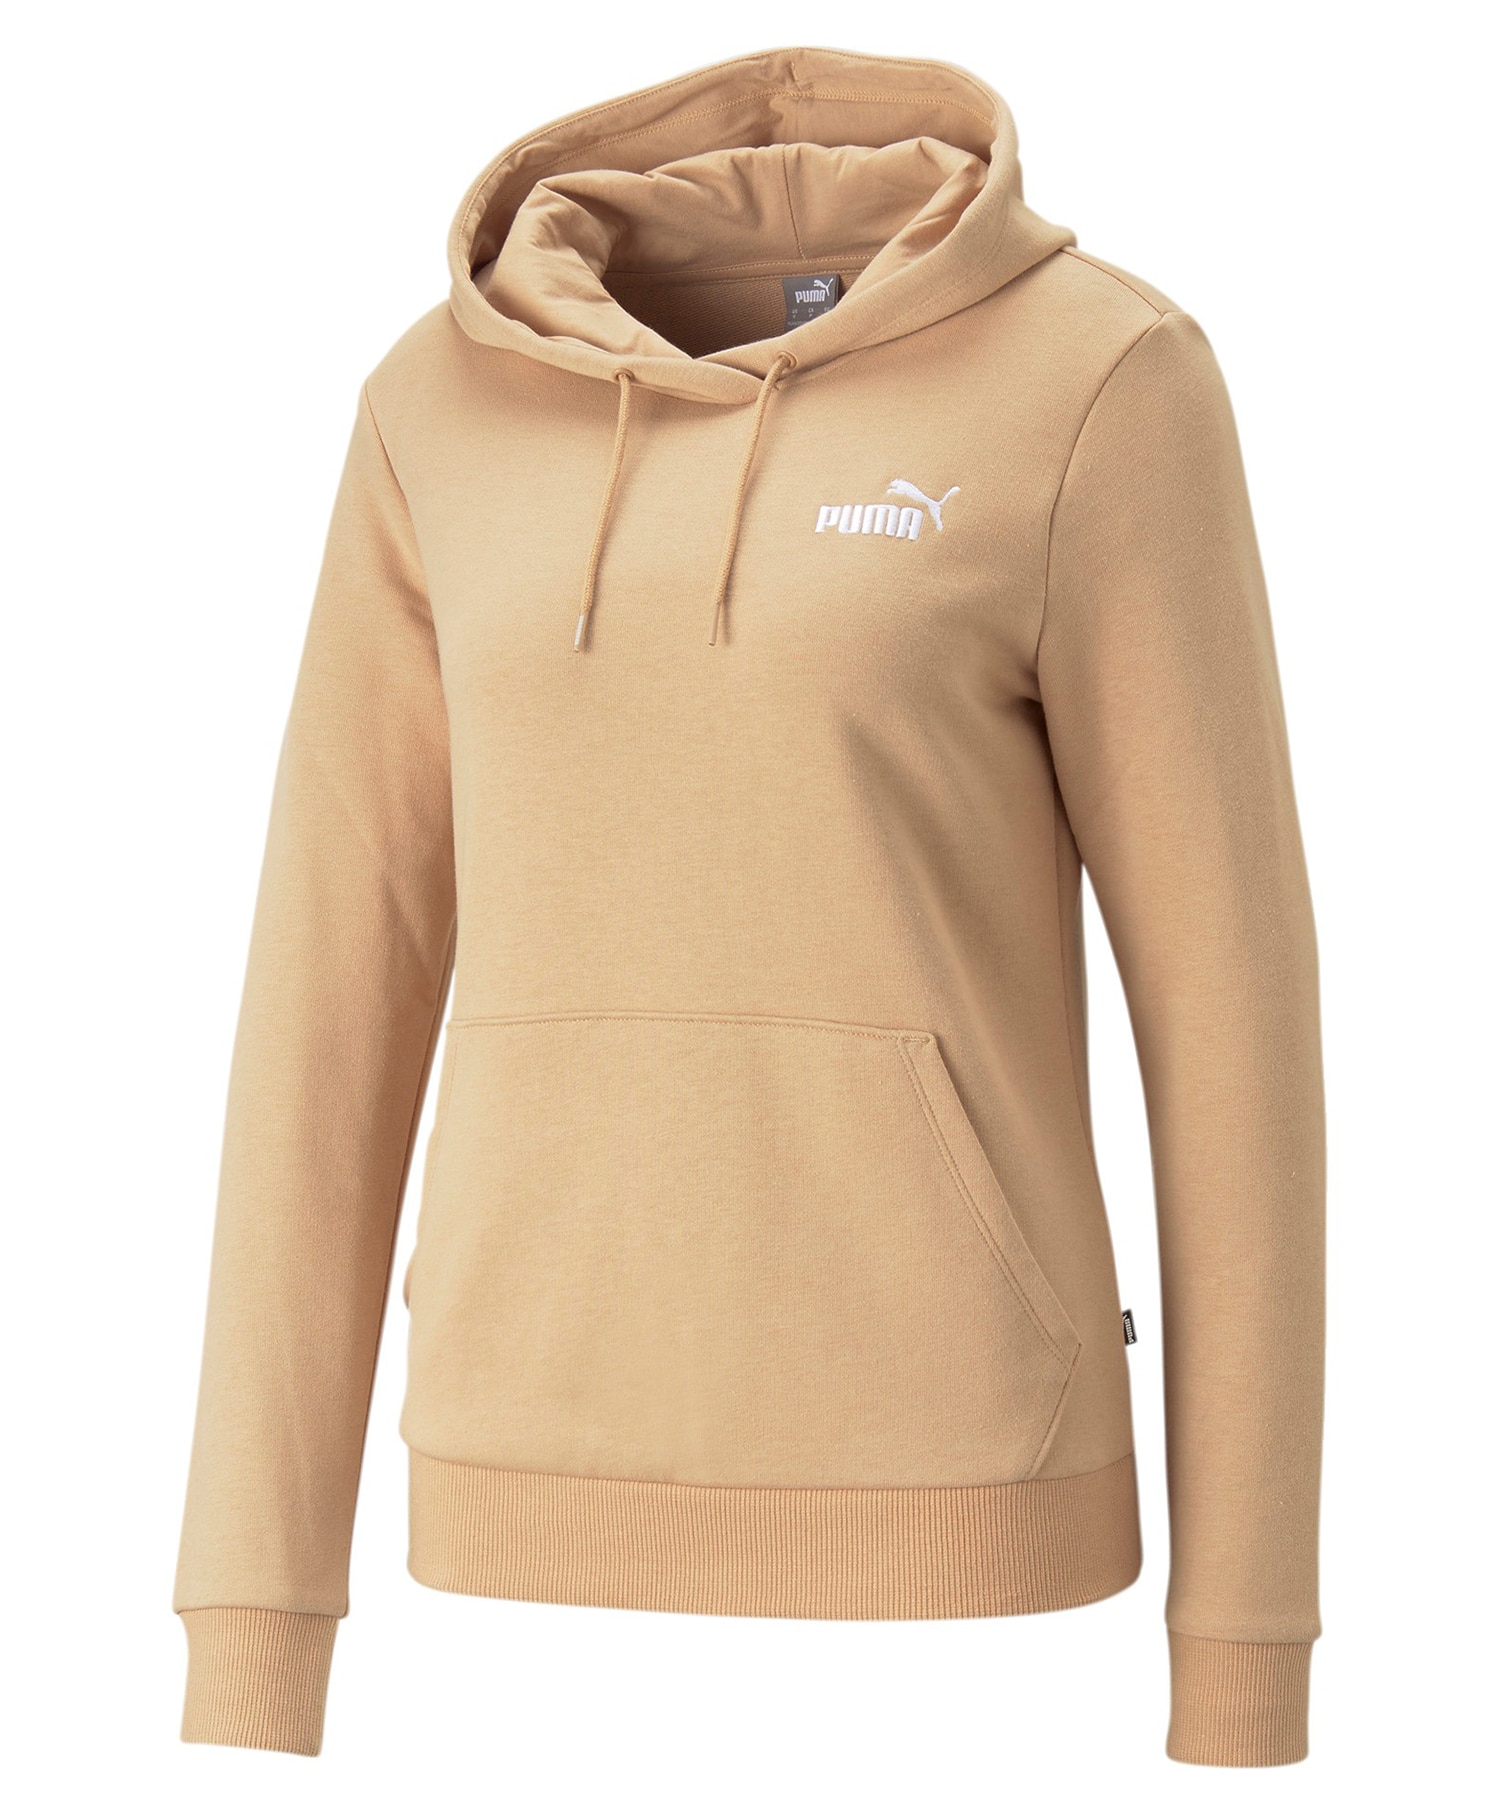 Puma brodert logo hoodie